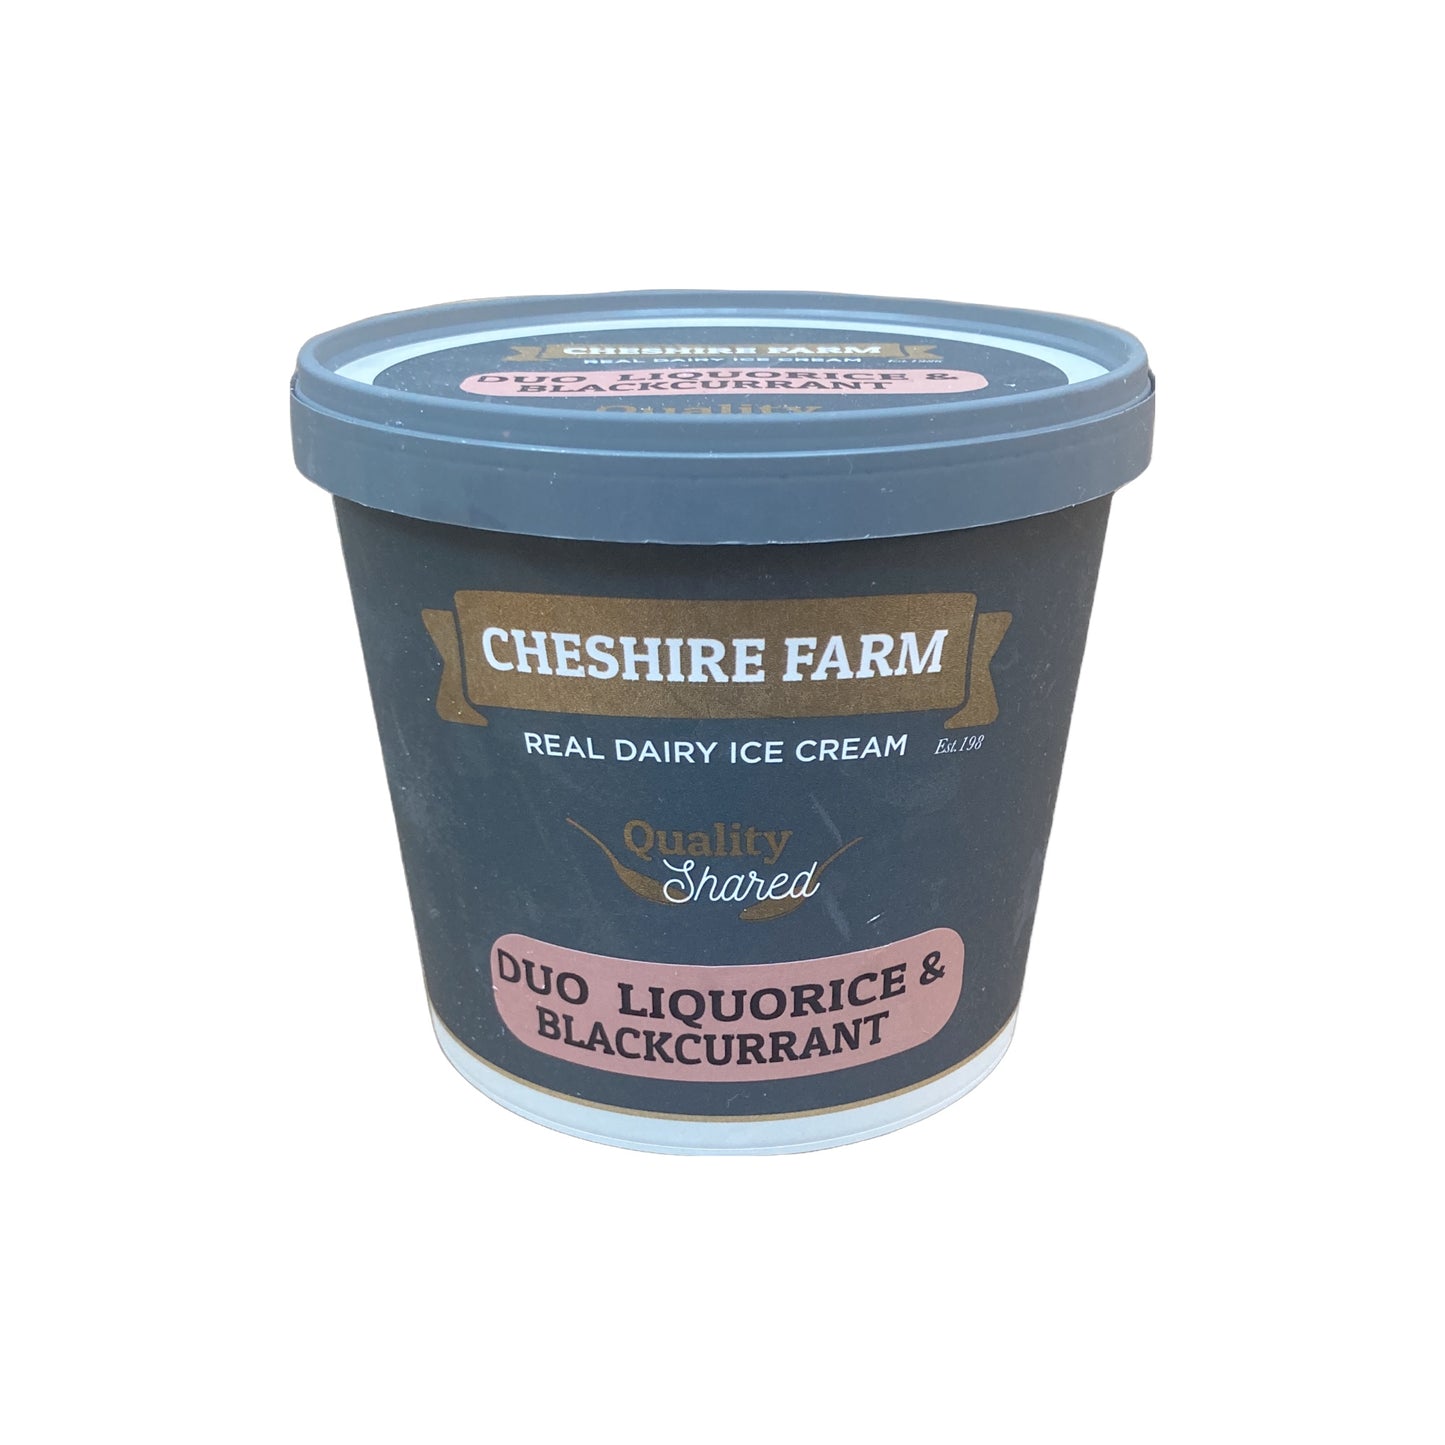 Cheshire Farm Real Dairy Liquorice and Blackcurrant Ice Cream 1 Litre Tub